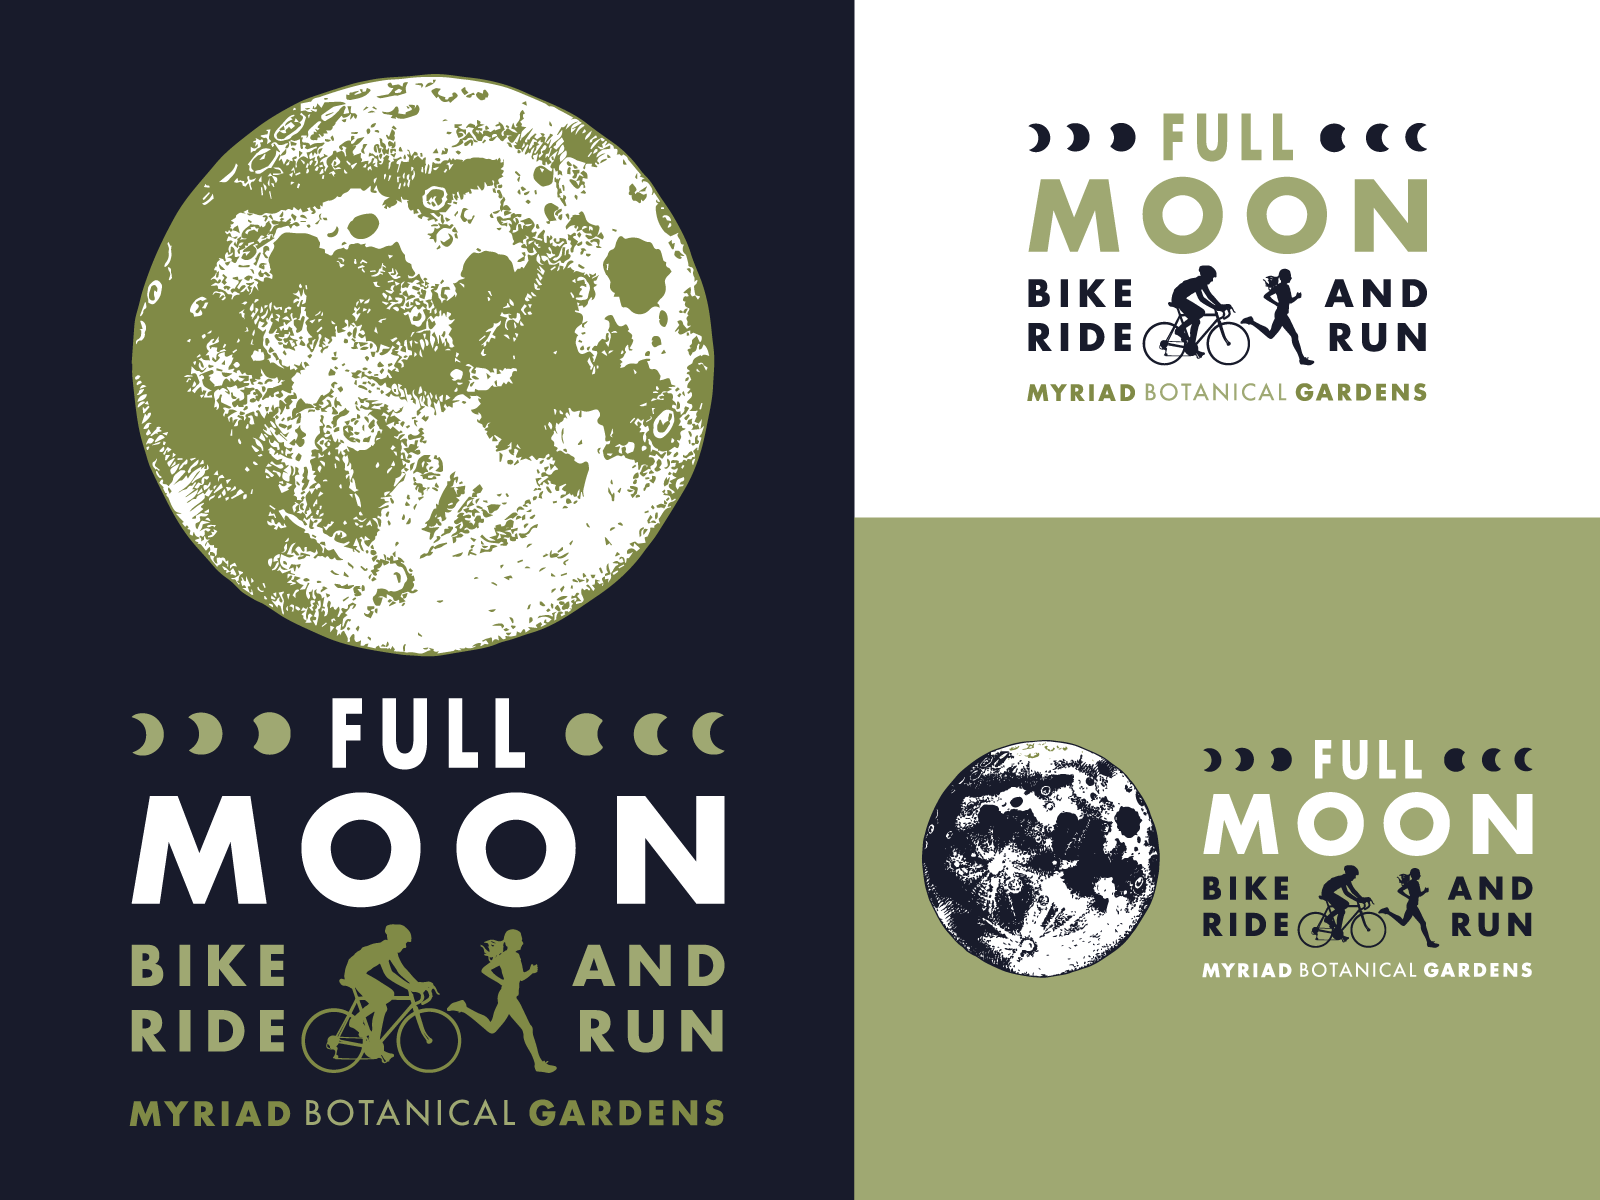 Full Moon Ride Run Logo by Sean Ball on Dribbble